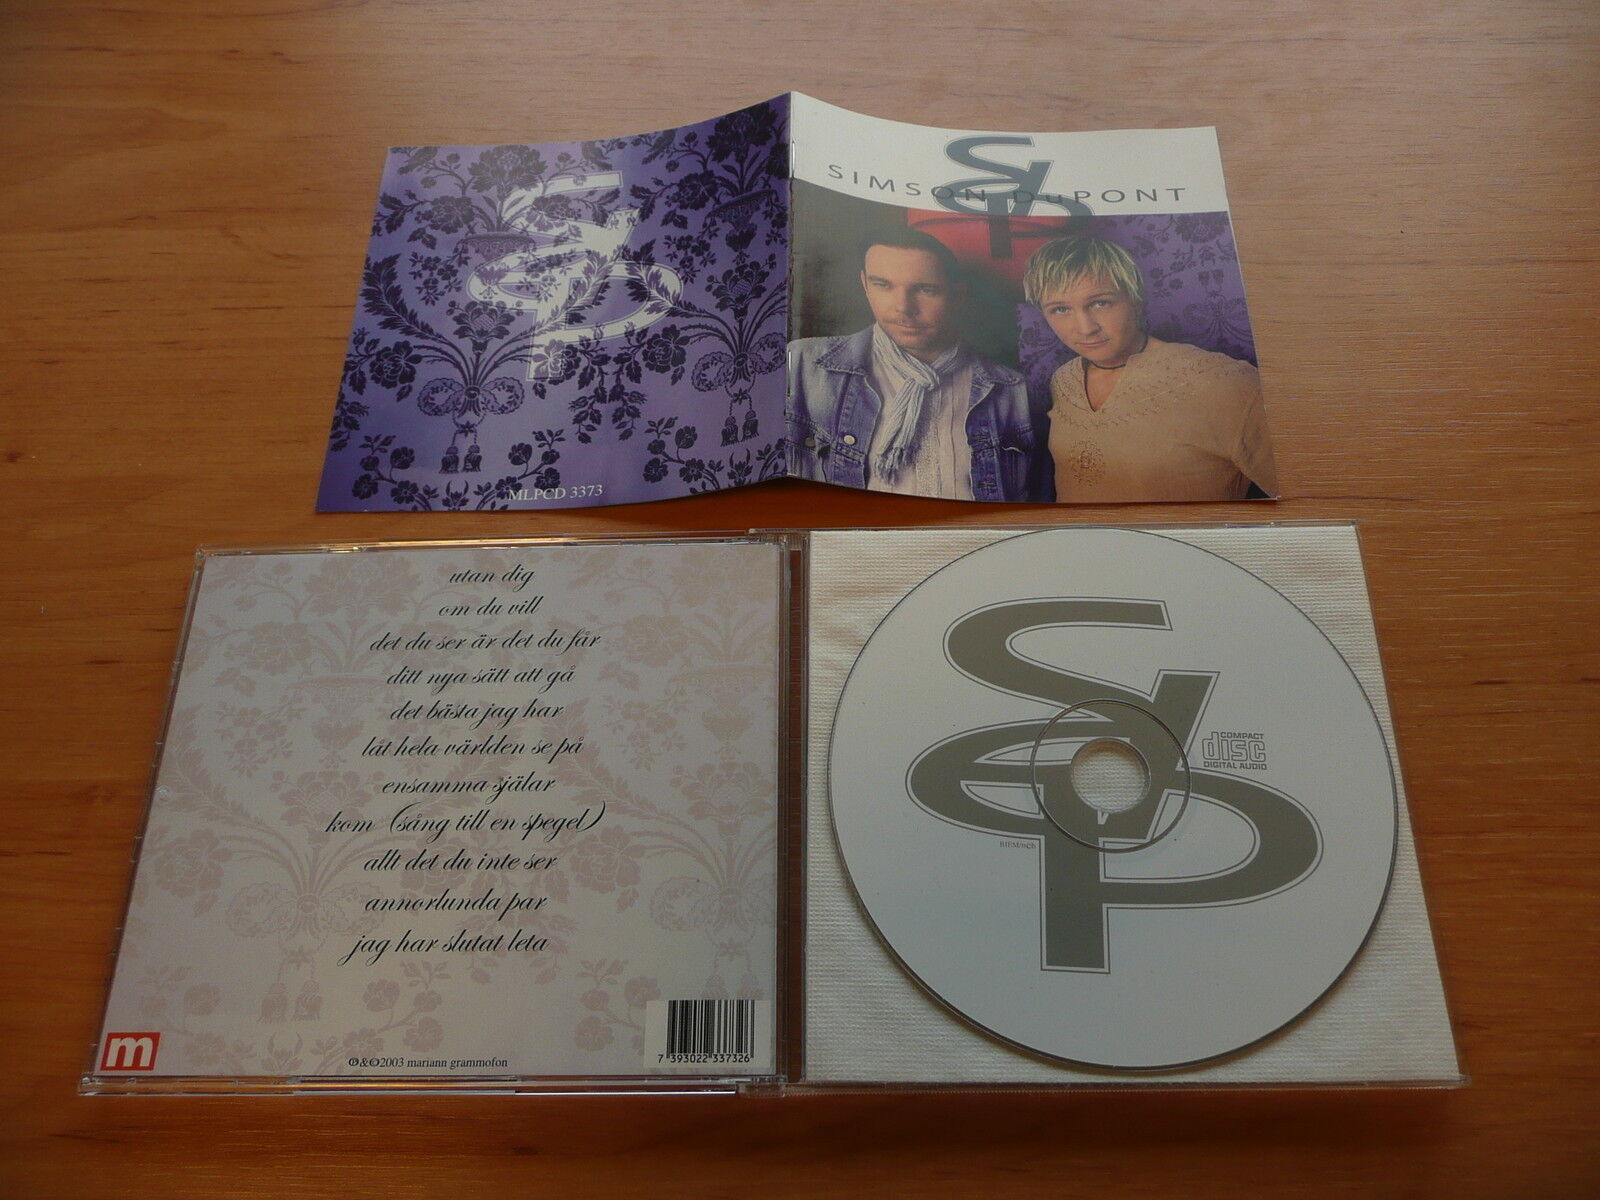 @ CD SIMSON DUPONT - S/T - AOR / MARIANN GRAMMOFON RECORDS 2003